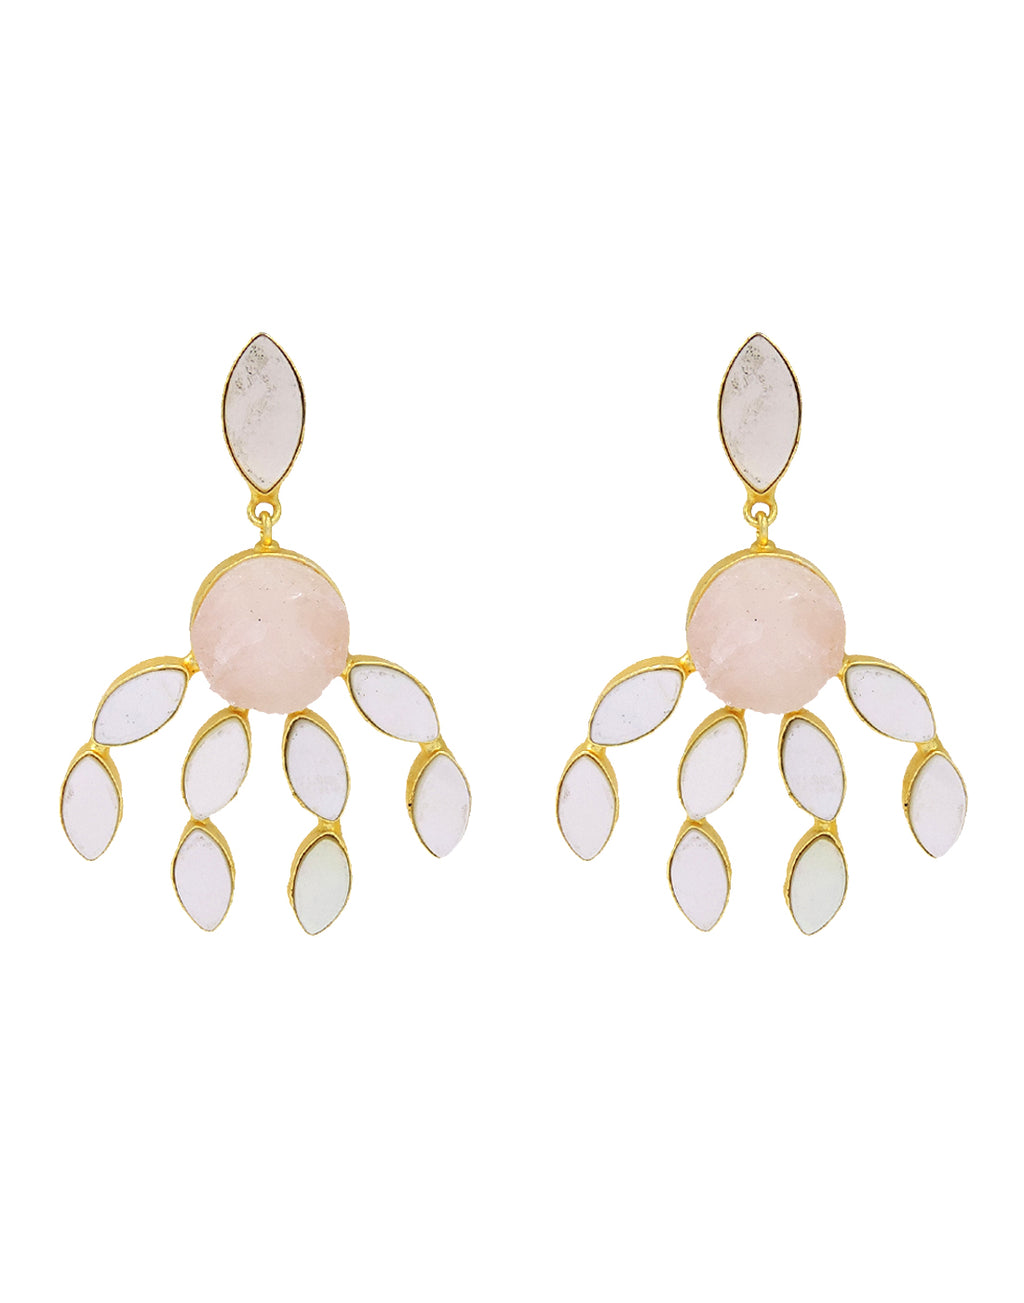 Curtain Earrings (Rose Quartz) - Statement Earrings - Gold-Plated & Hypoallergenic - Made in India - Dubai Jewellery - Dori